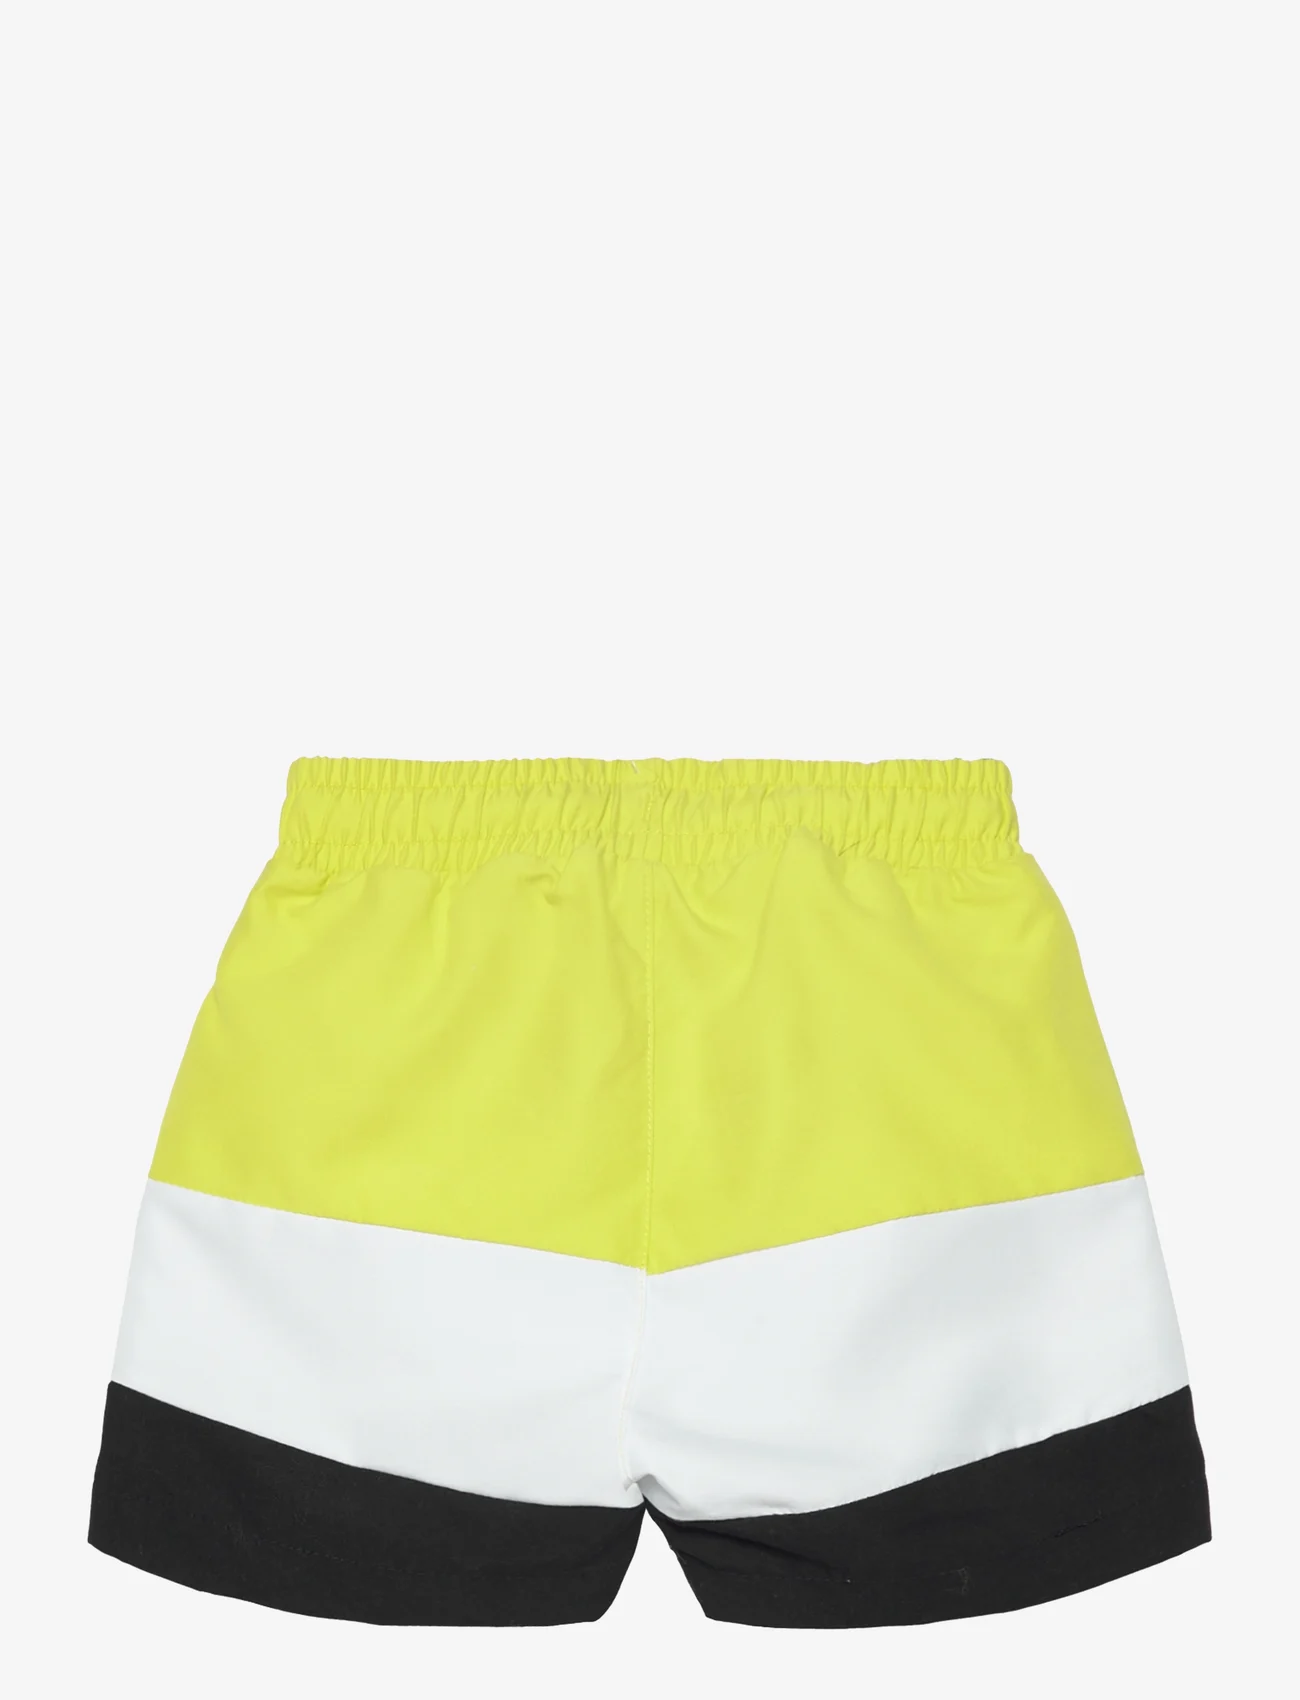 FILA - LANGULA beach shorts - shorts - evening primrose-bright white-black - 1